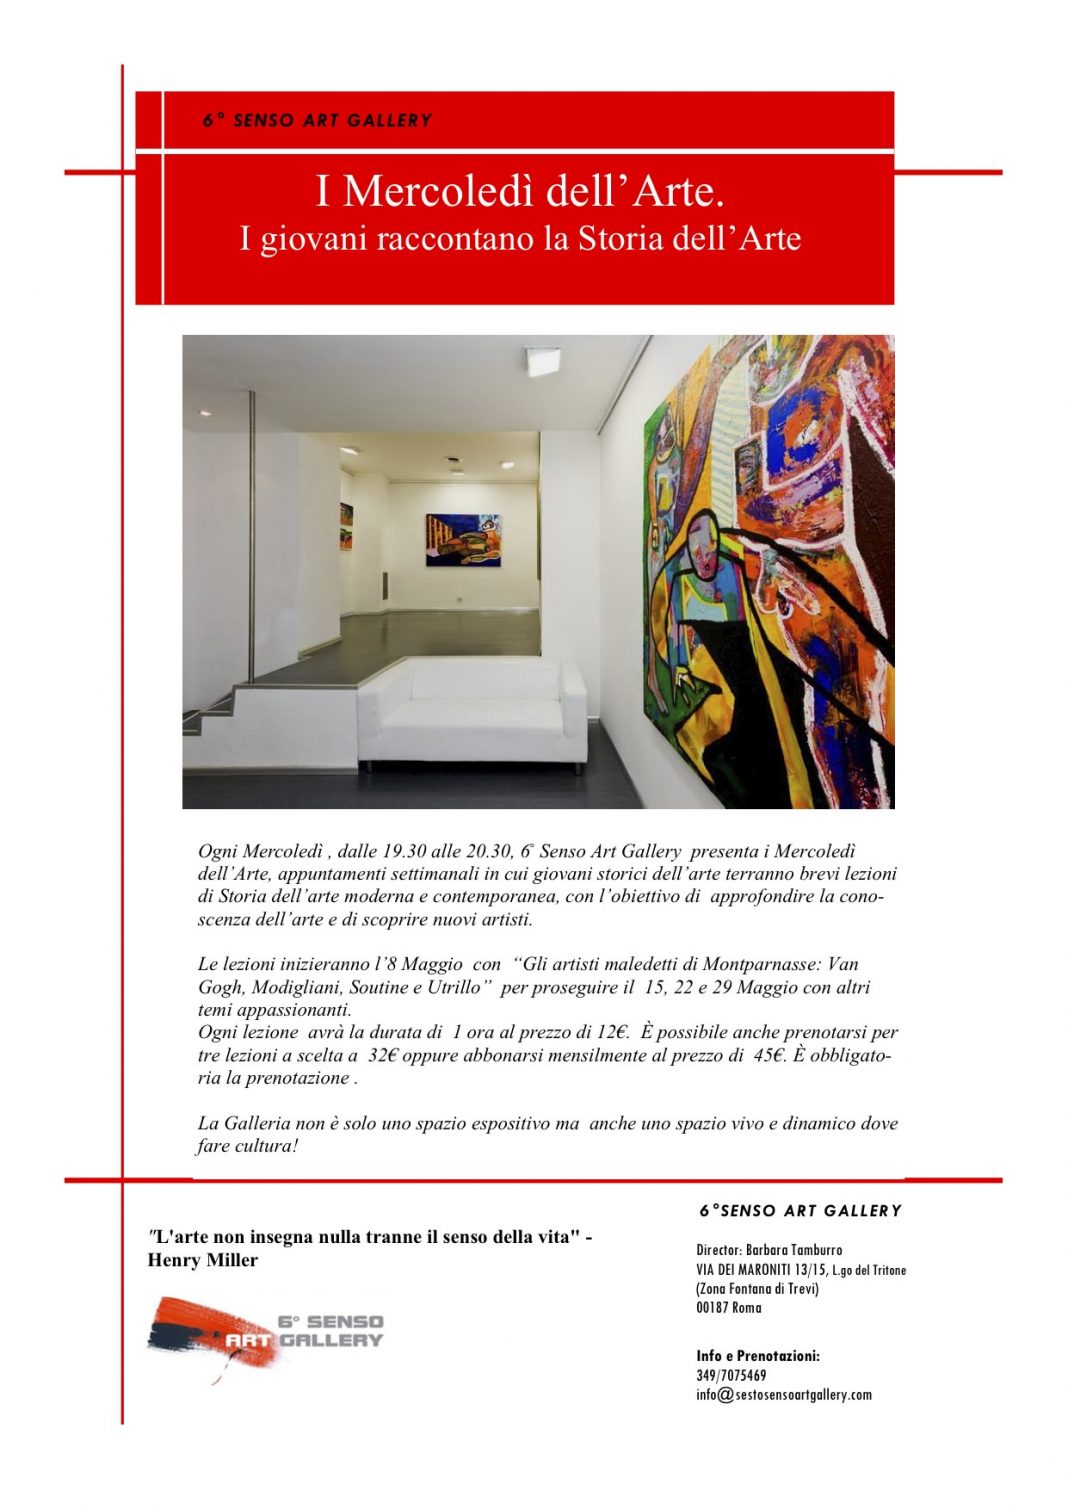 Gli artisti maledetti di Montparnasse: Van Gogh, Modigliani, Soutine e Utrillohttps://www.exibart.com/repository/media/eventi/2013/05/gli-artisti-maledetti-di-montparnasse-van-gogh-modigliani-soutine-e-utrillo-1068x1509.jpg